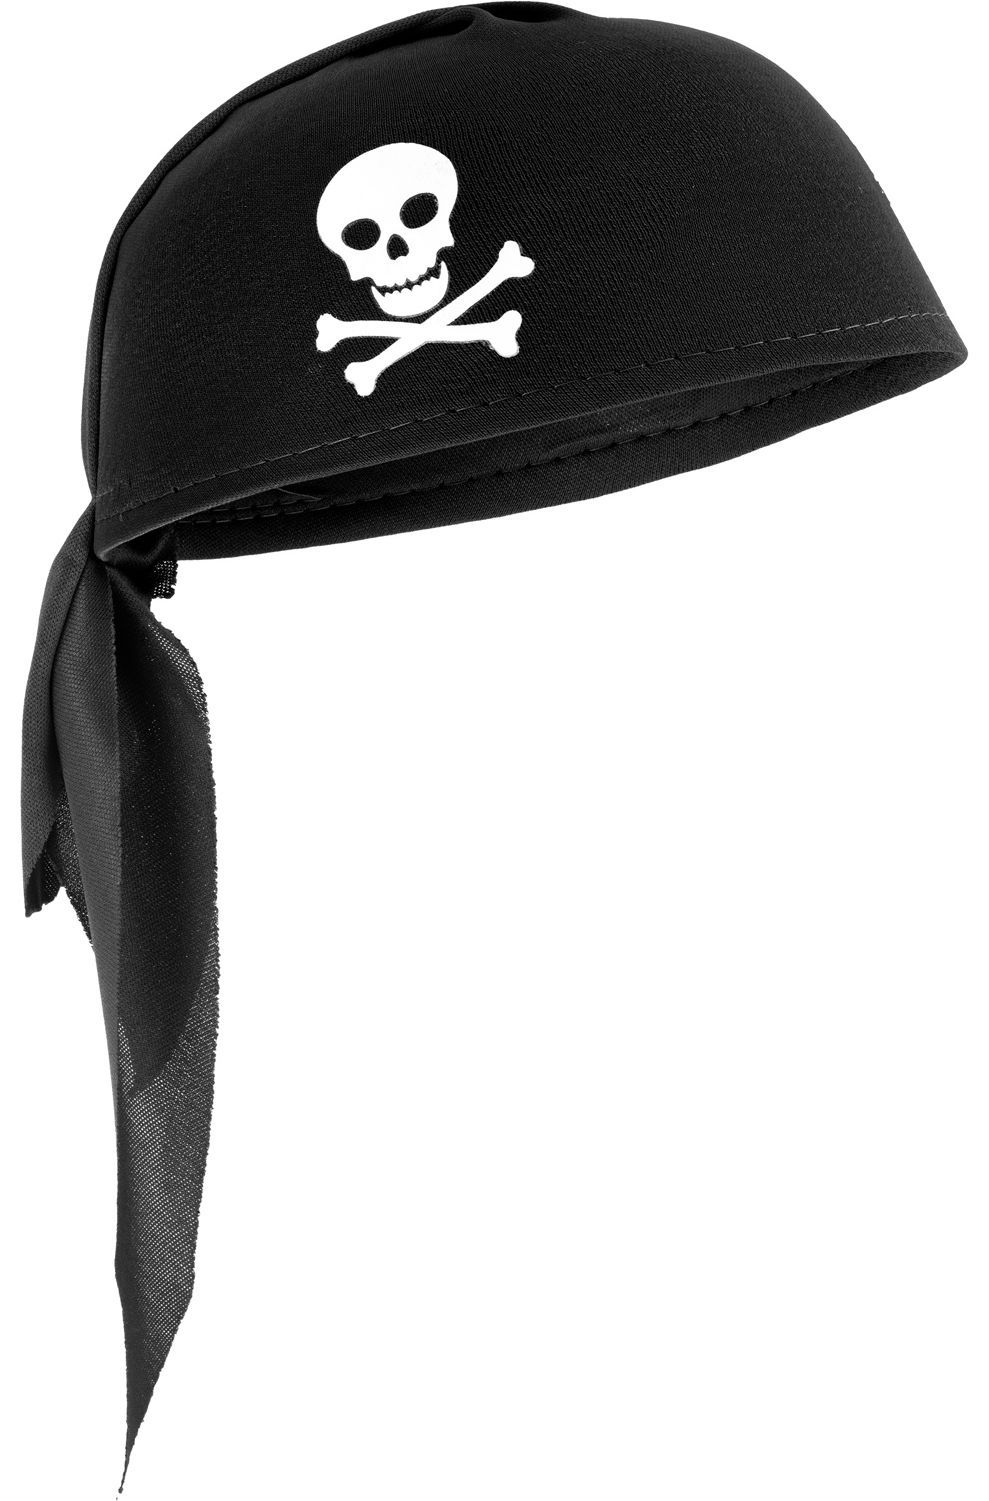 Bandana hoed piraten zwart